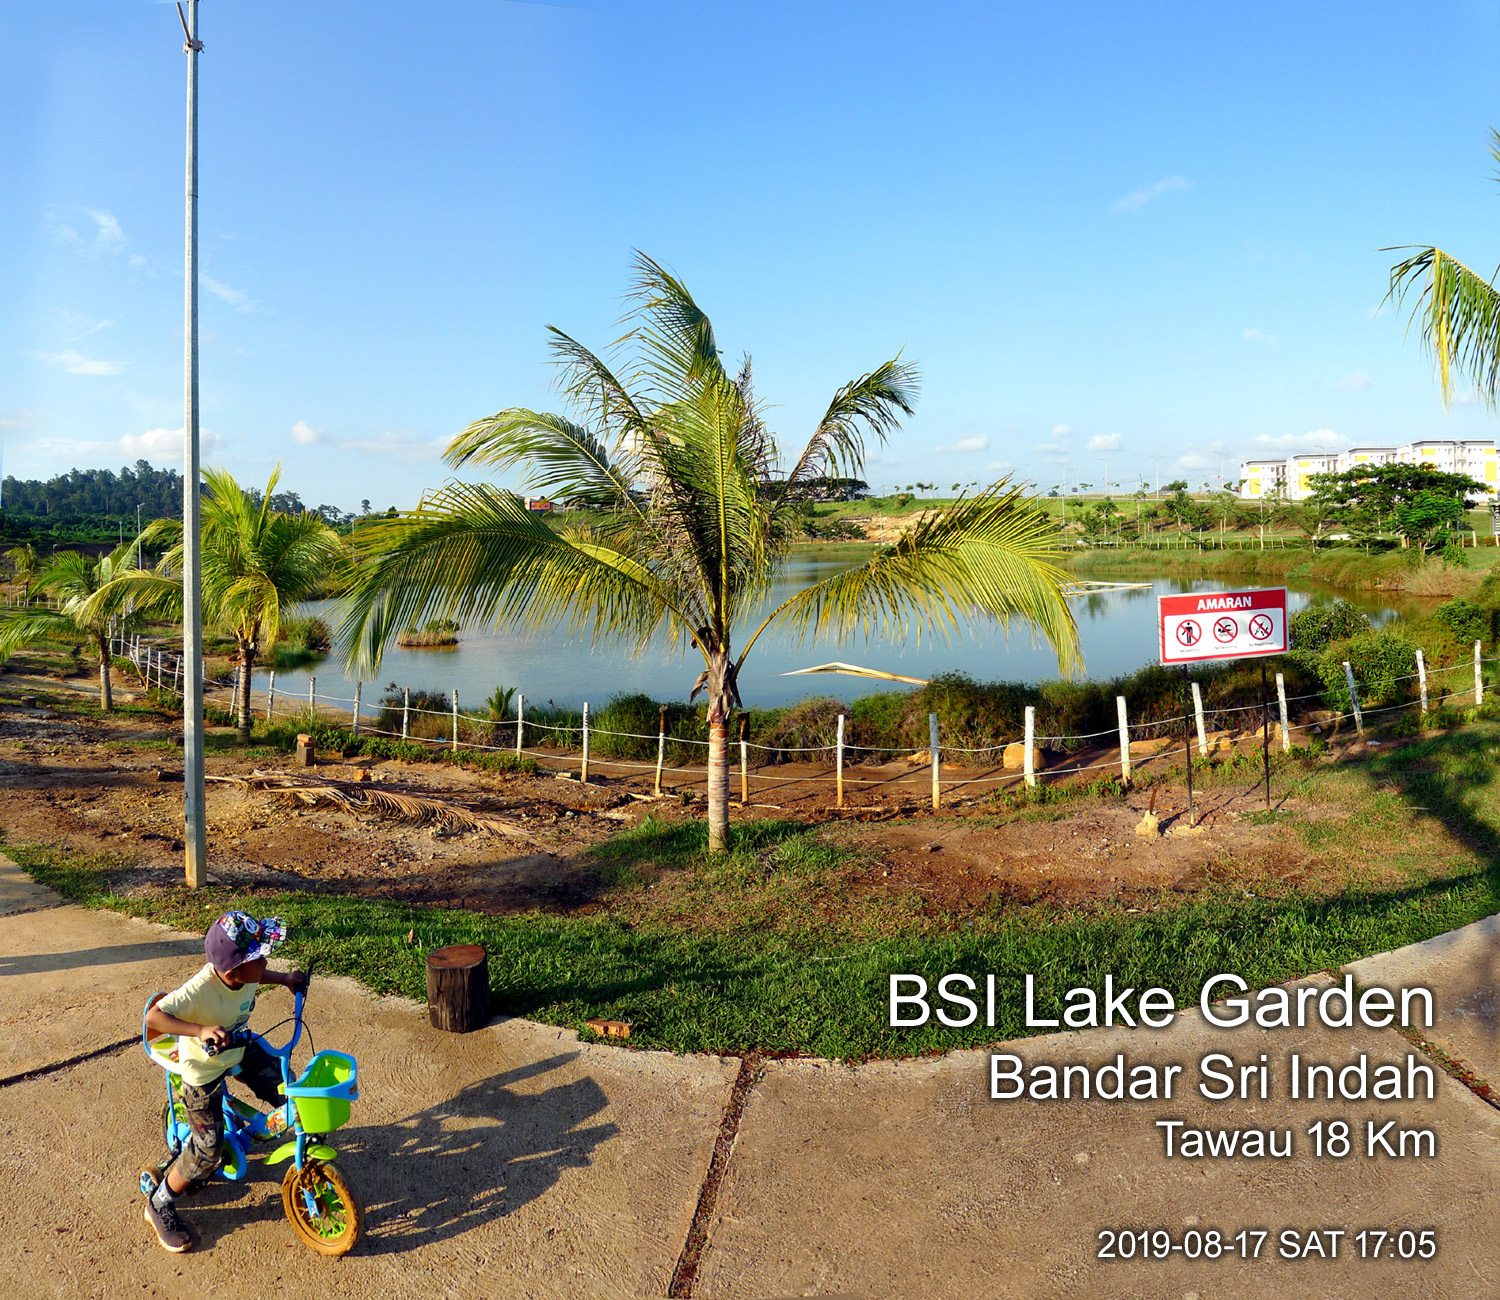 BSI Lake Garden Bandar Sri Indah